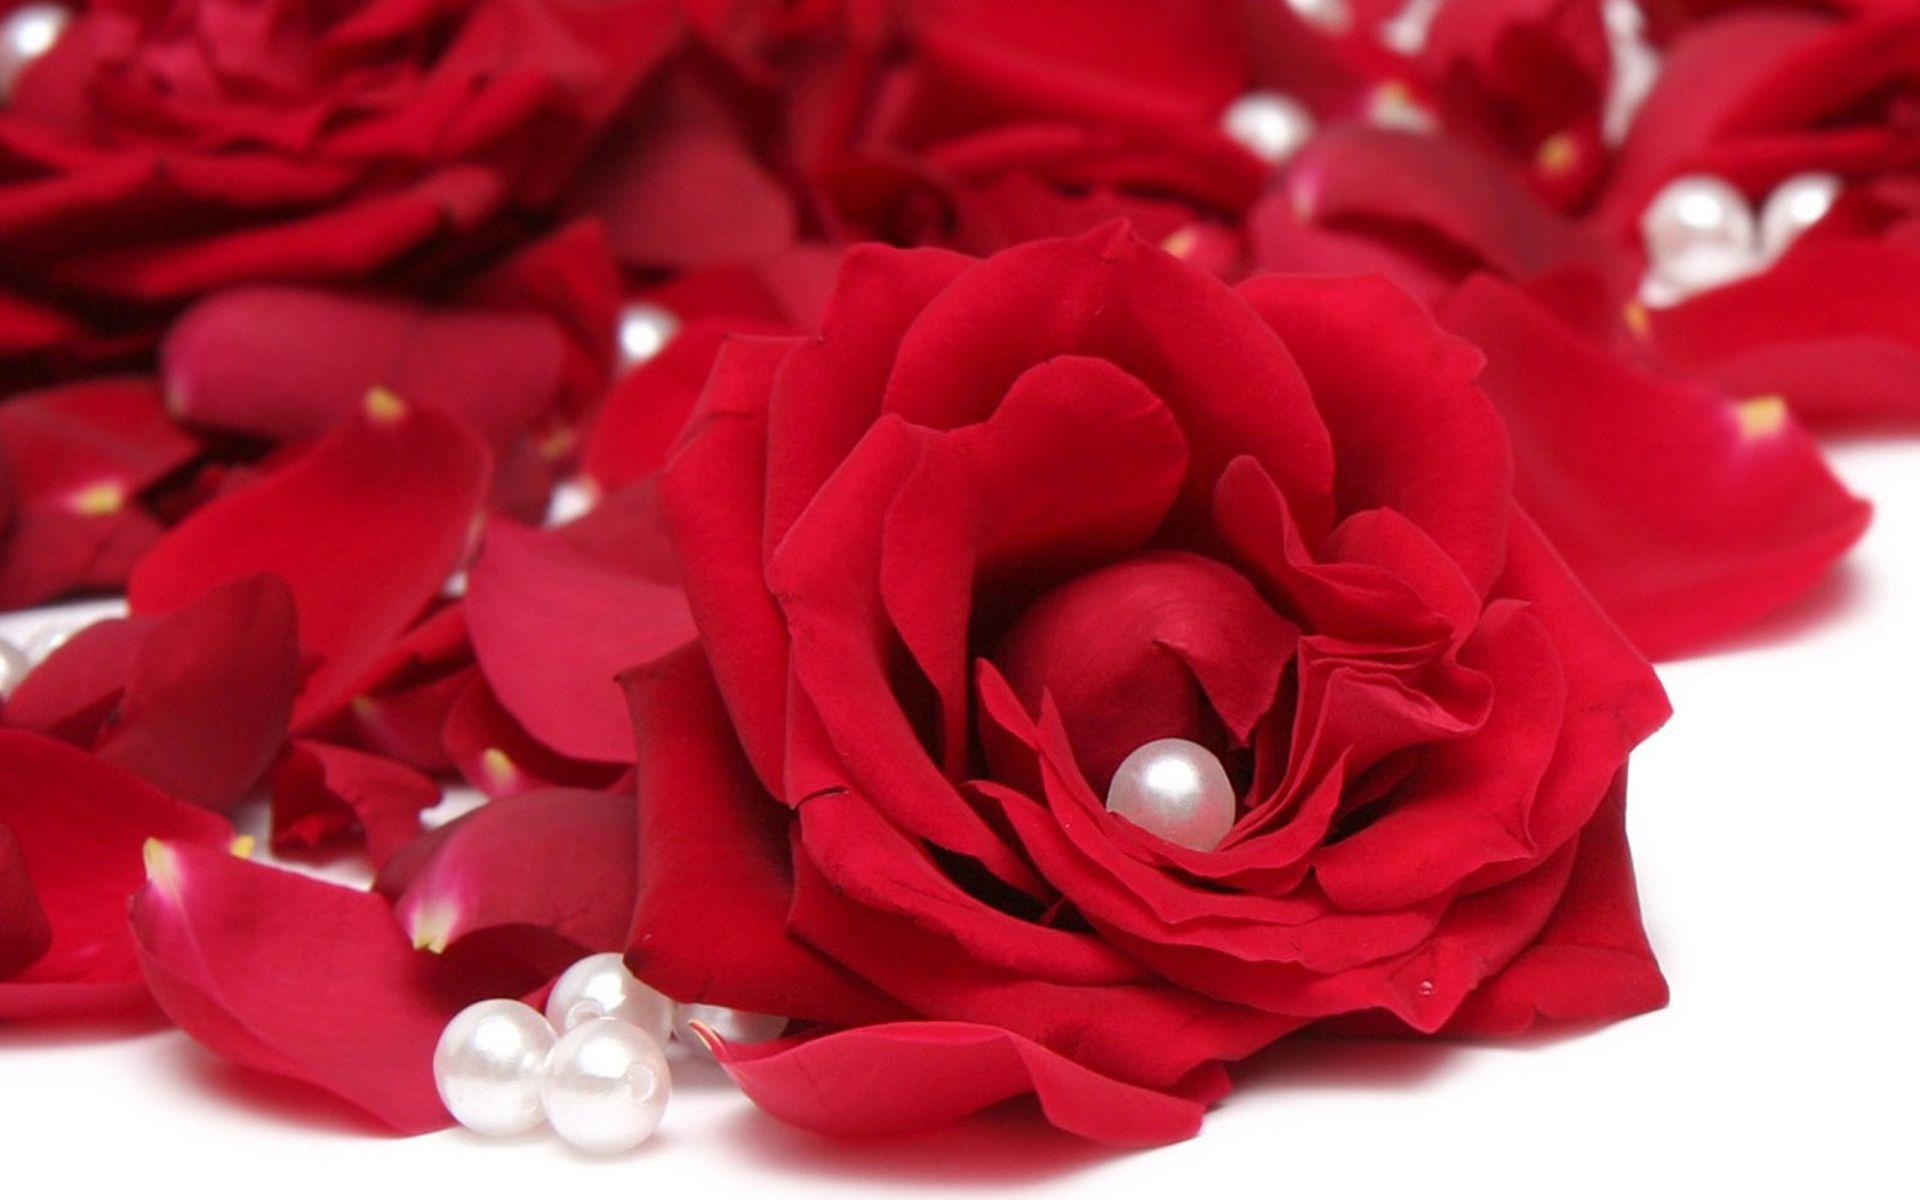 Red Rose HD Flowers Wallpaper For Desktop Background Image Pc